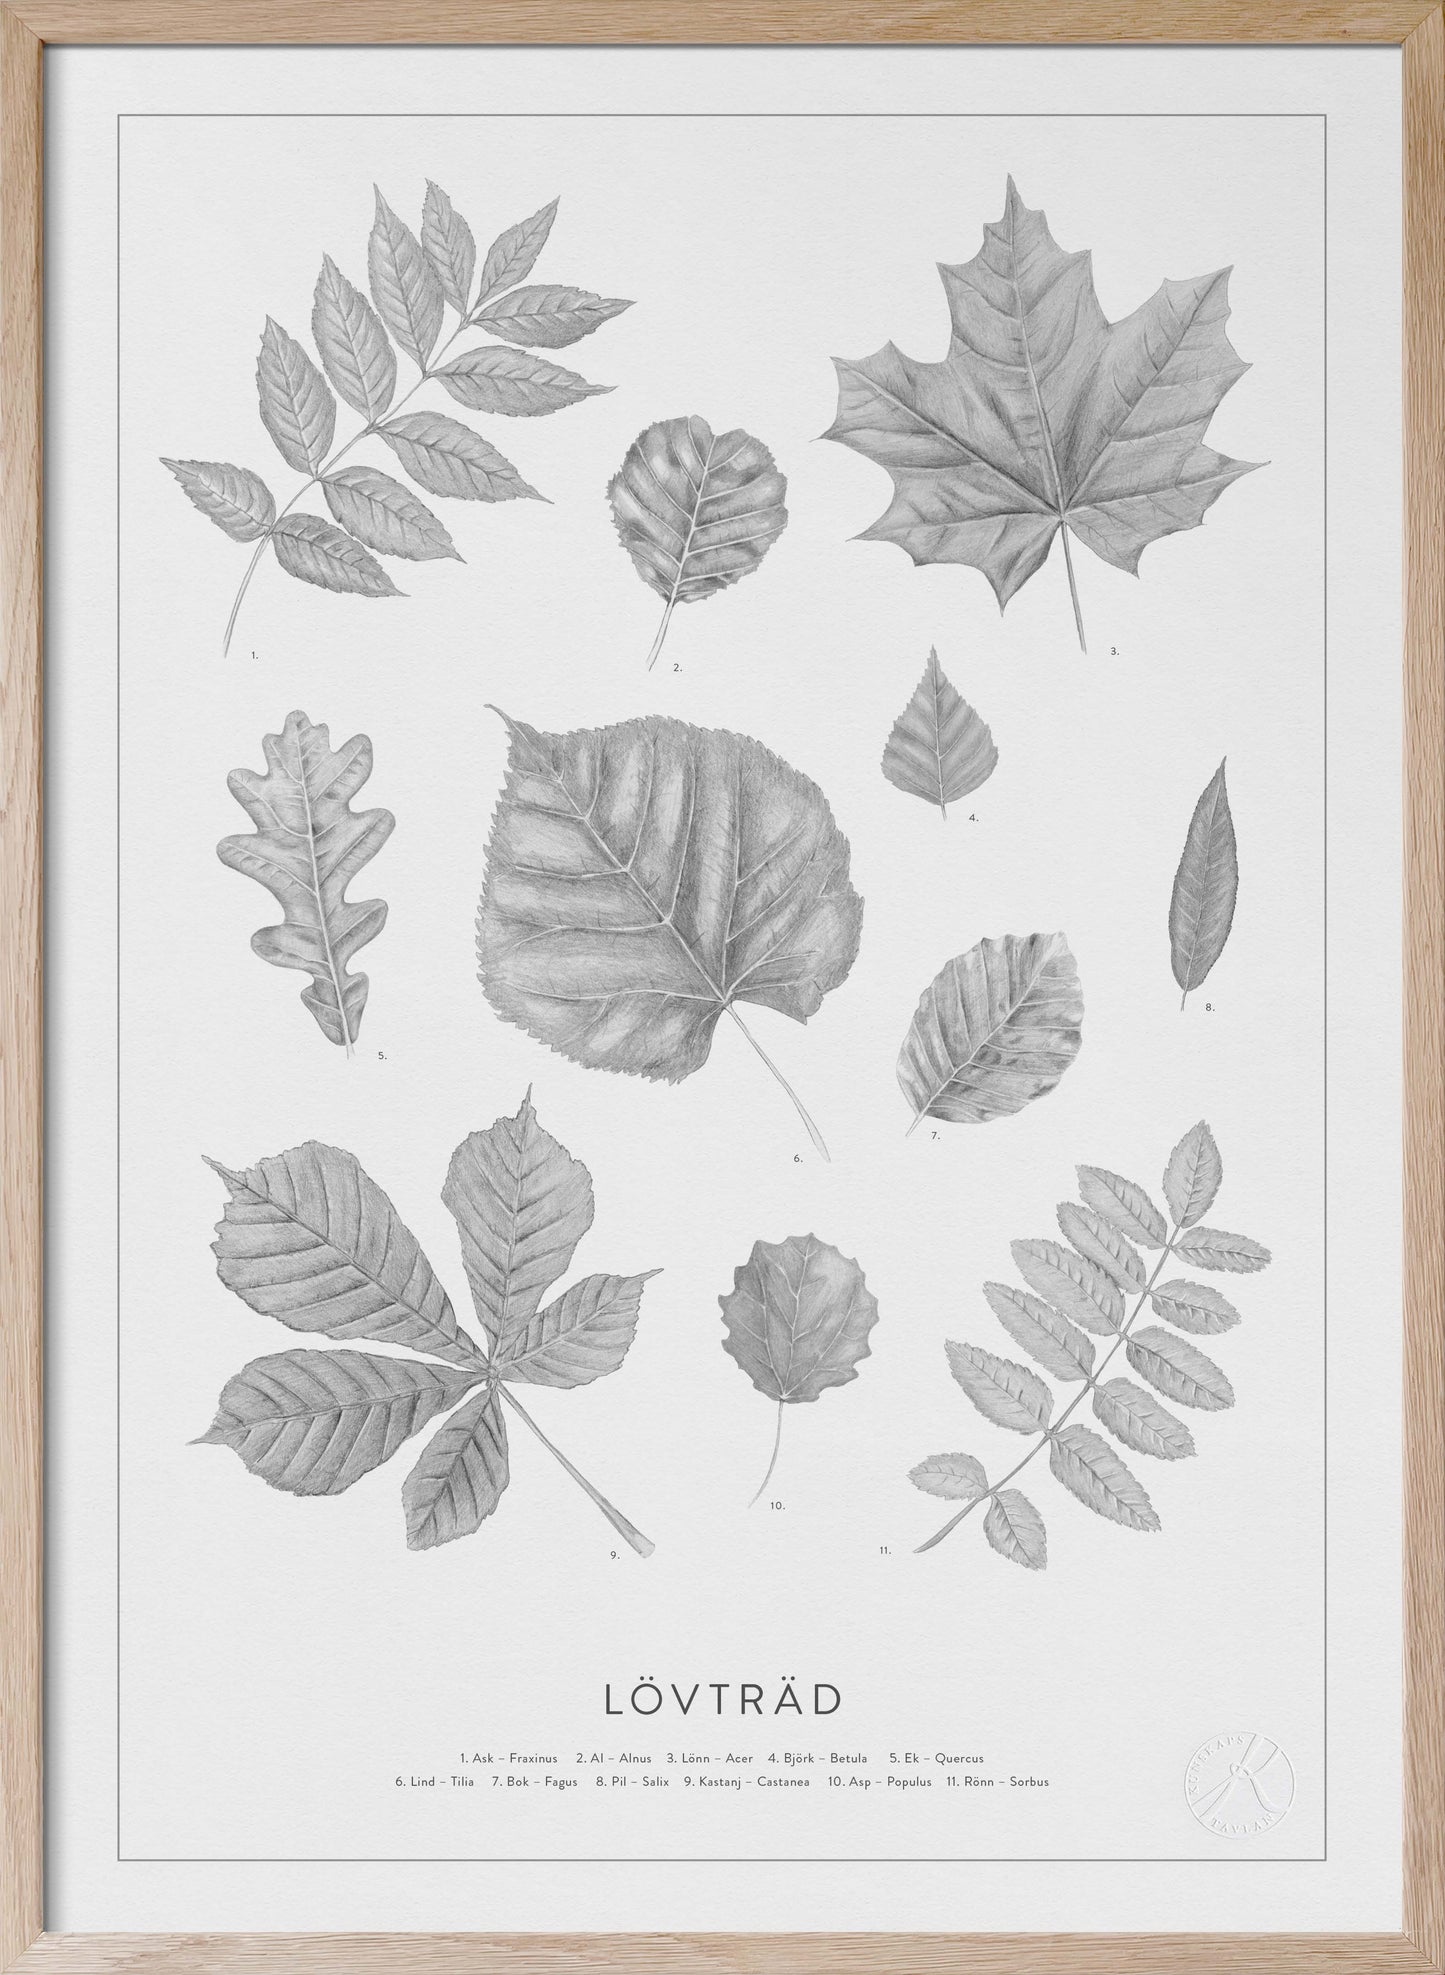 Lövträd - Leaves in Swedish